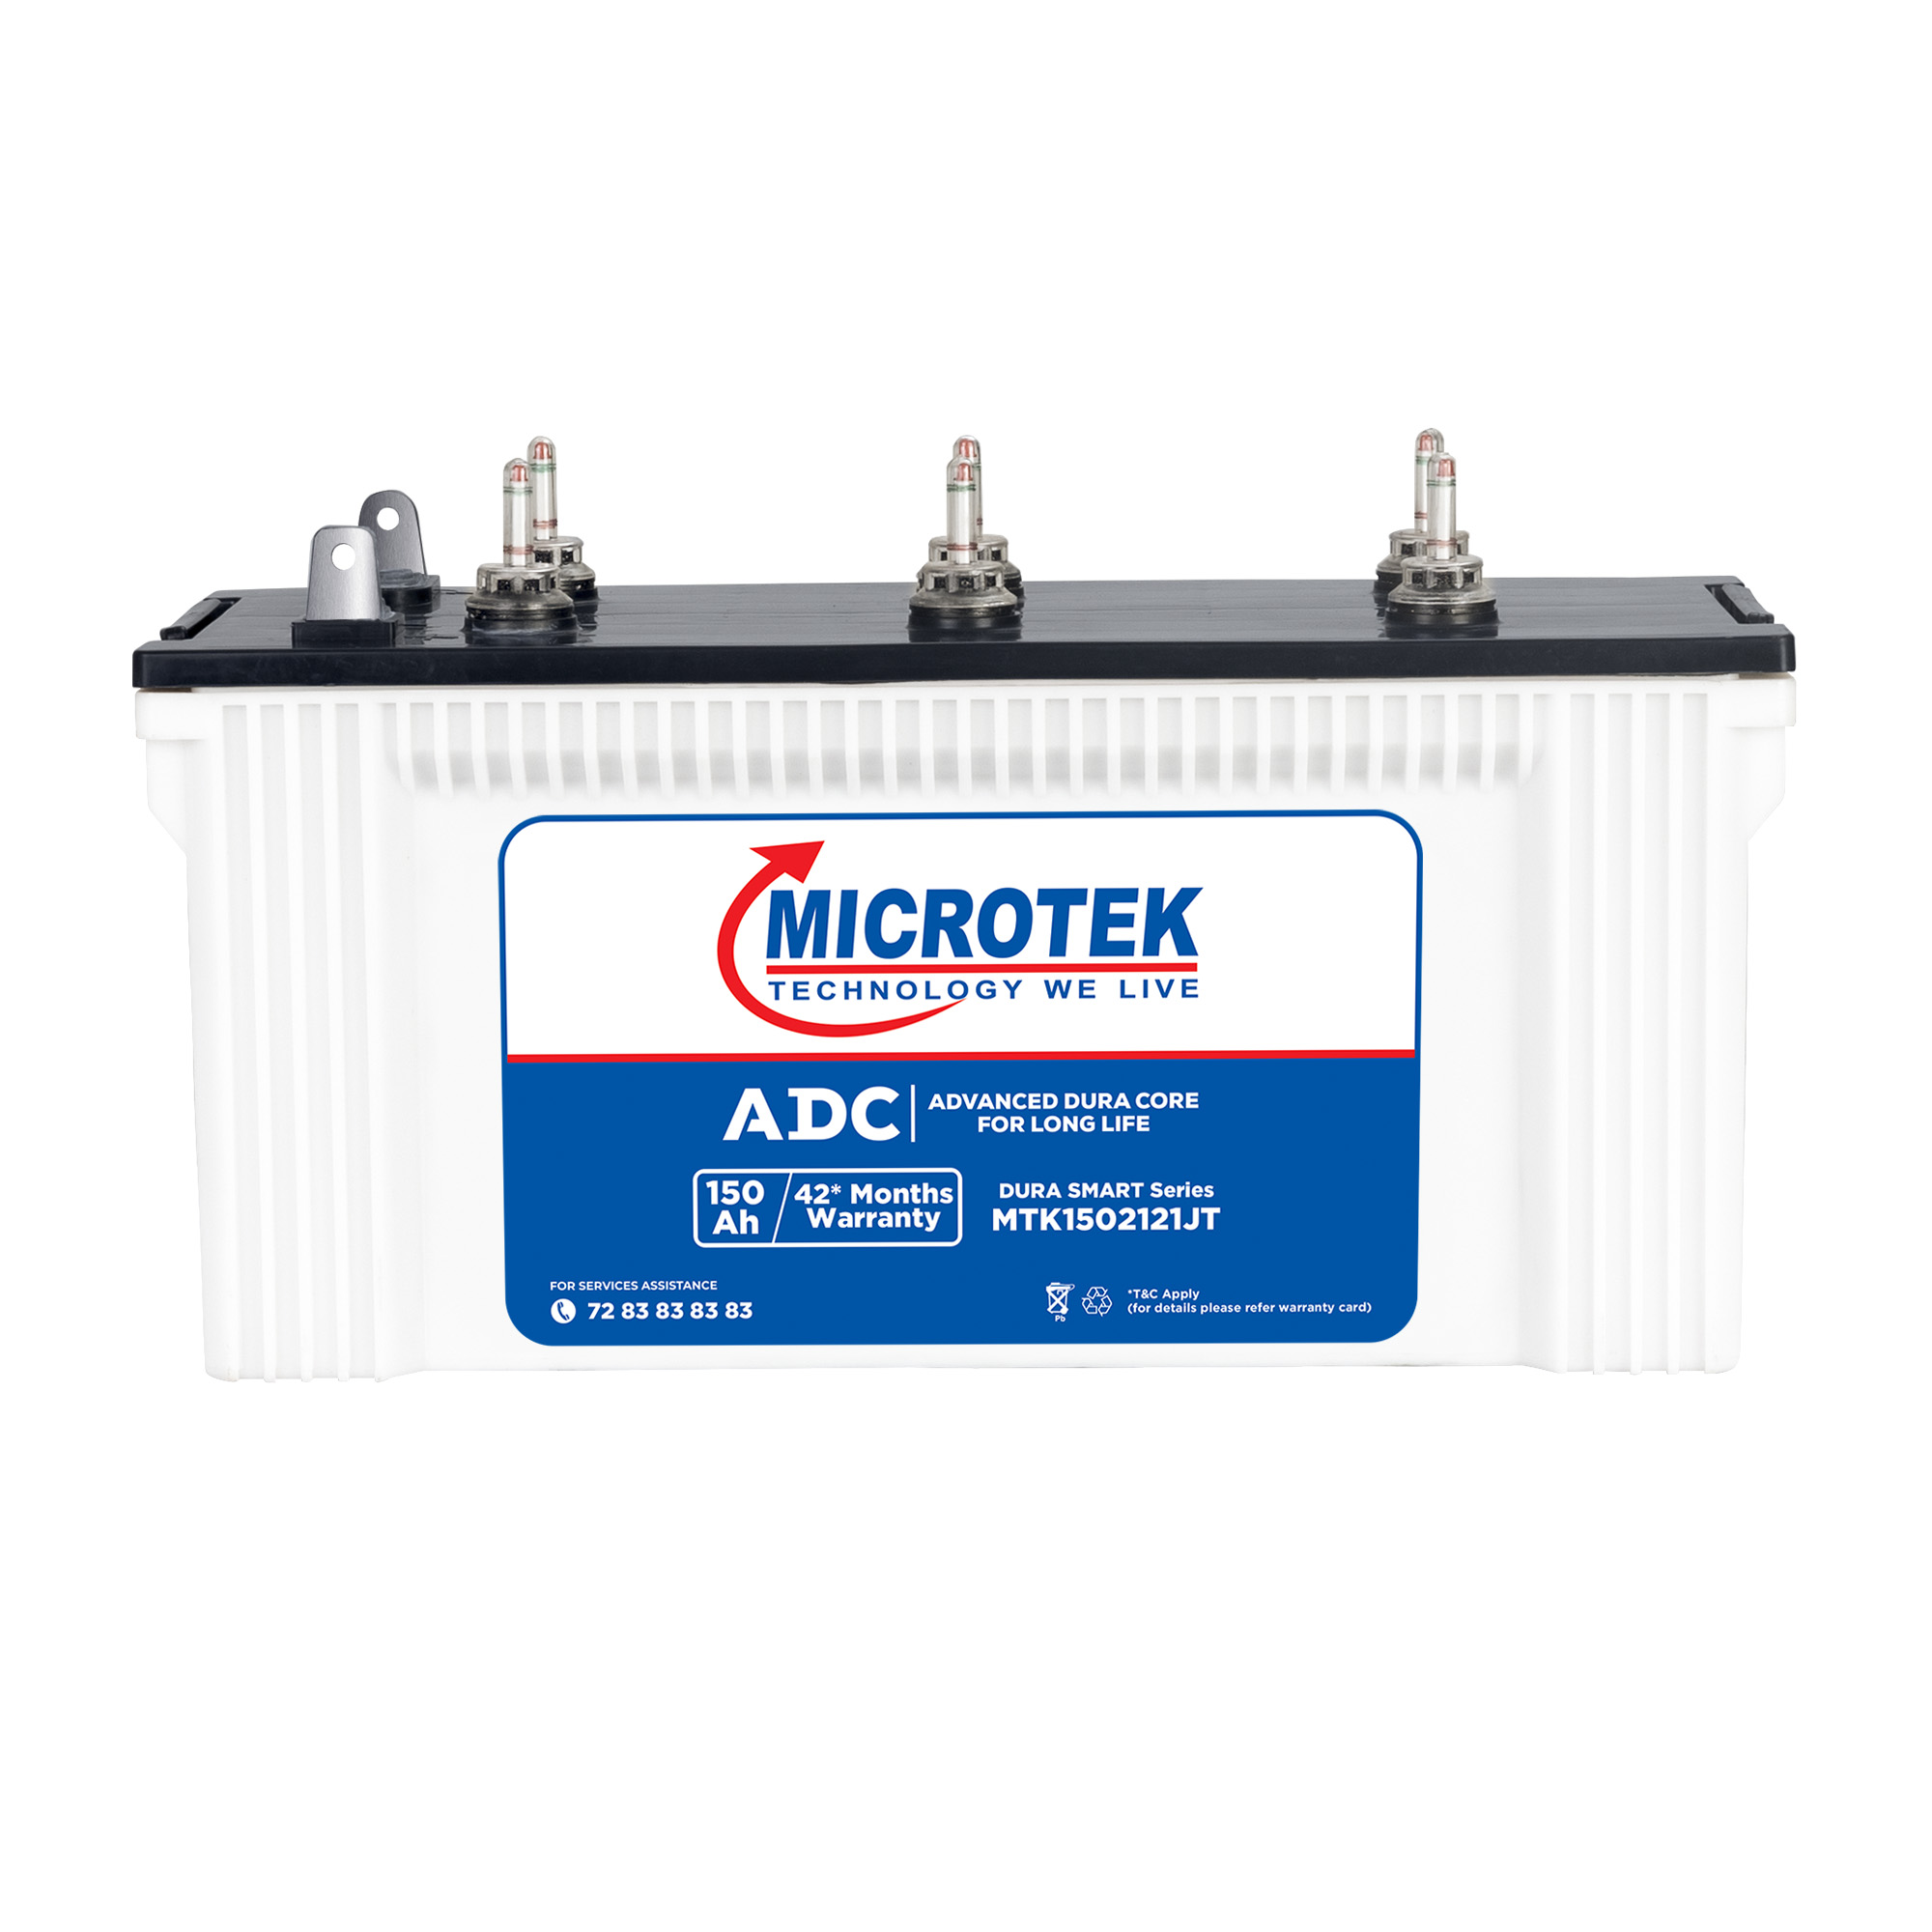  Microtek Dura Smart MTK1502121JT 150Ah/12V Inverter Battery With Advanced Dura Core Technology